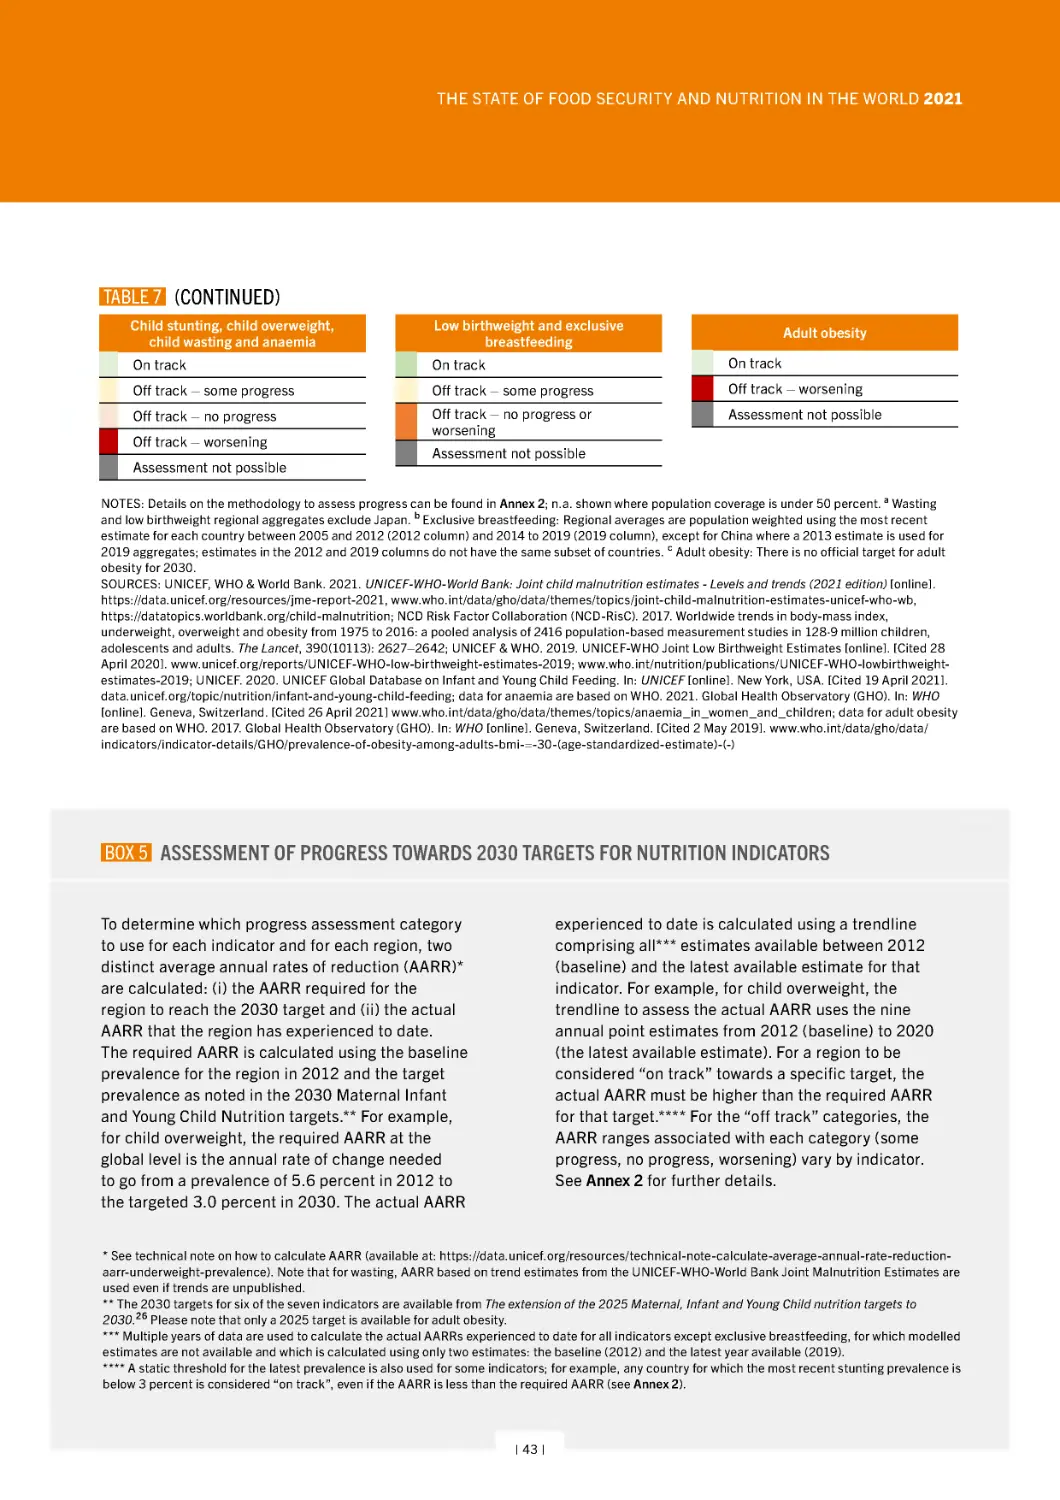 ﻿ box 5   Assessment of progress towards 2030 targets for nutrition indicator